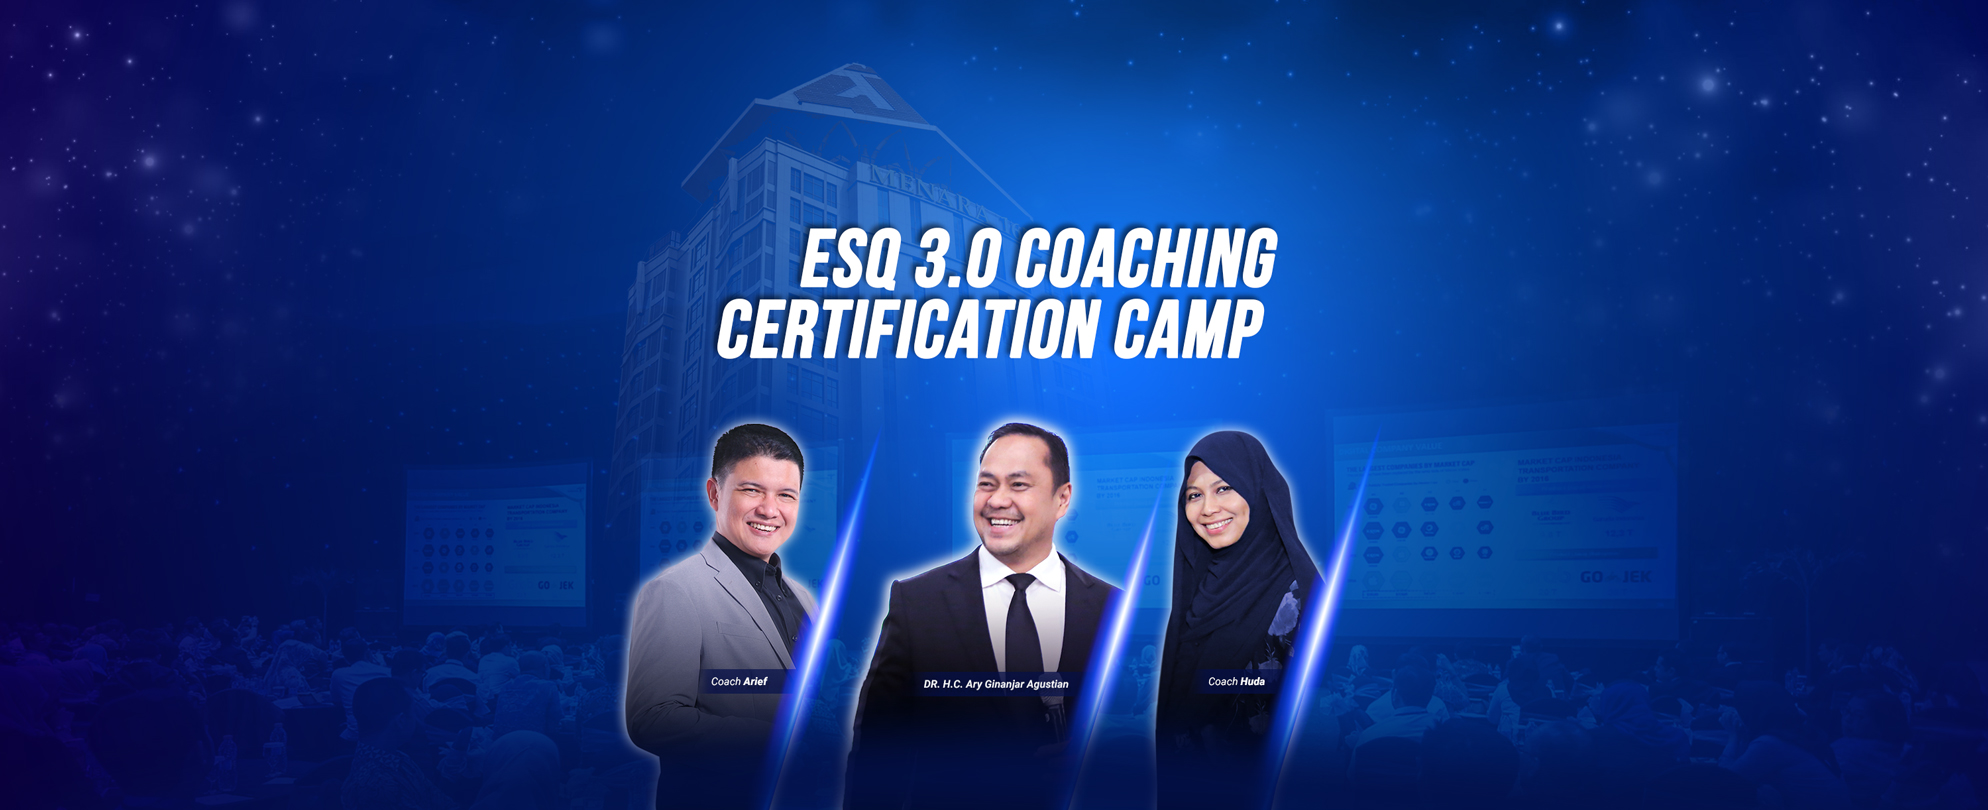 Web-Header-3.0-Coaching-Certification-Camp-2019